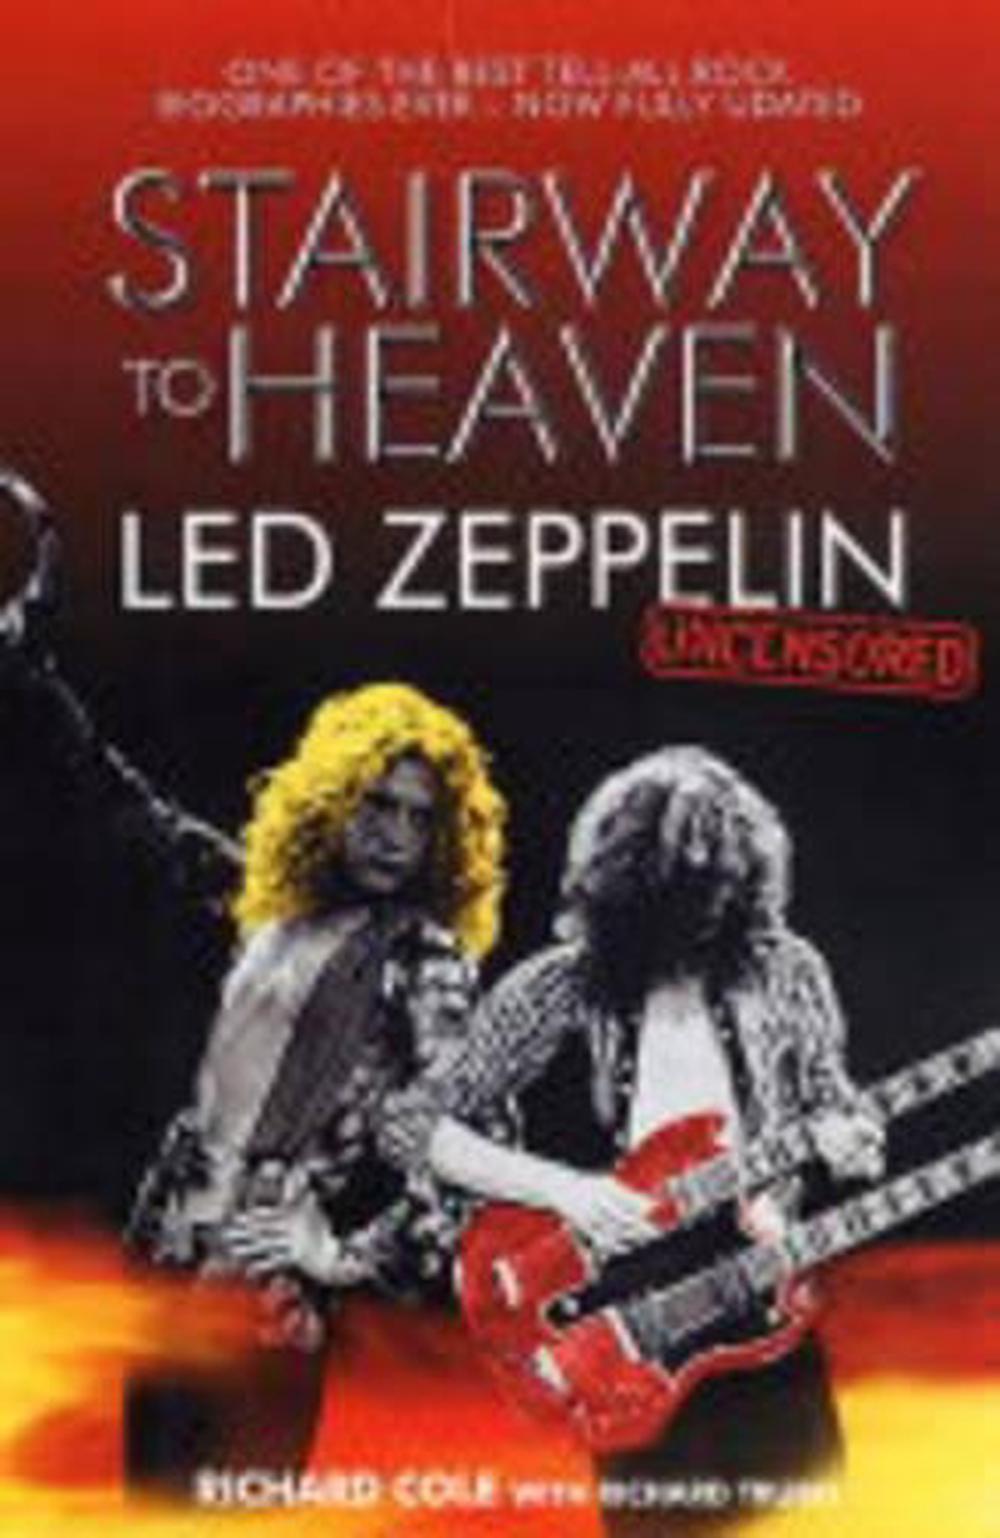 led zeppelin mp3 download stairway to heaven